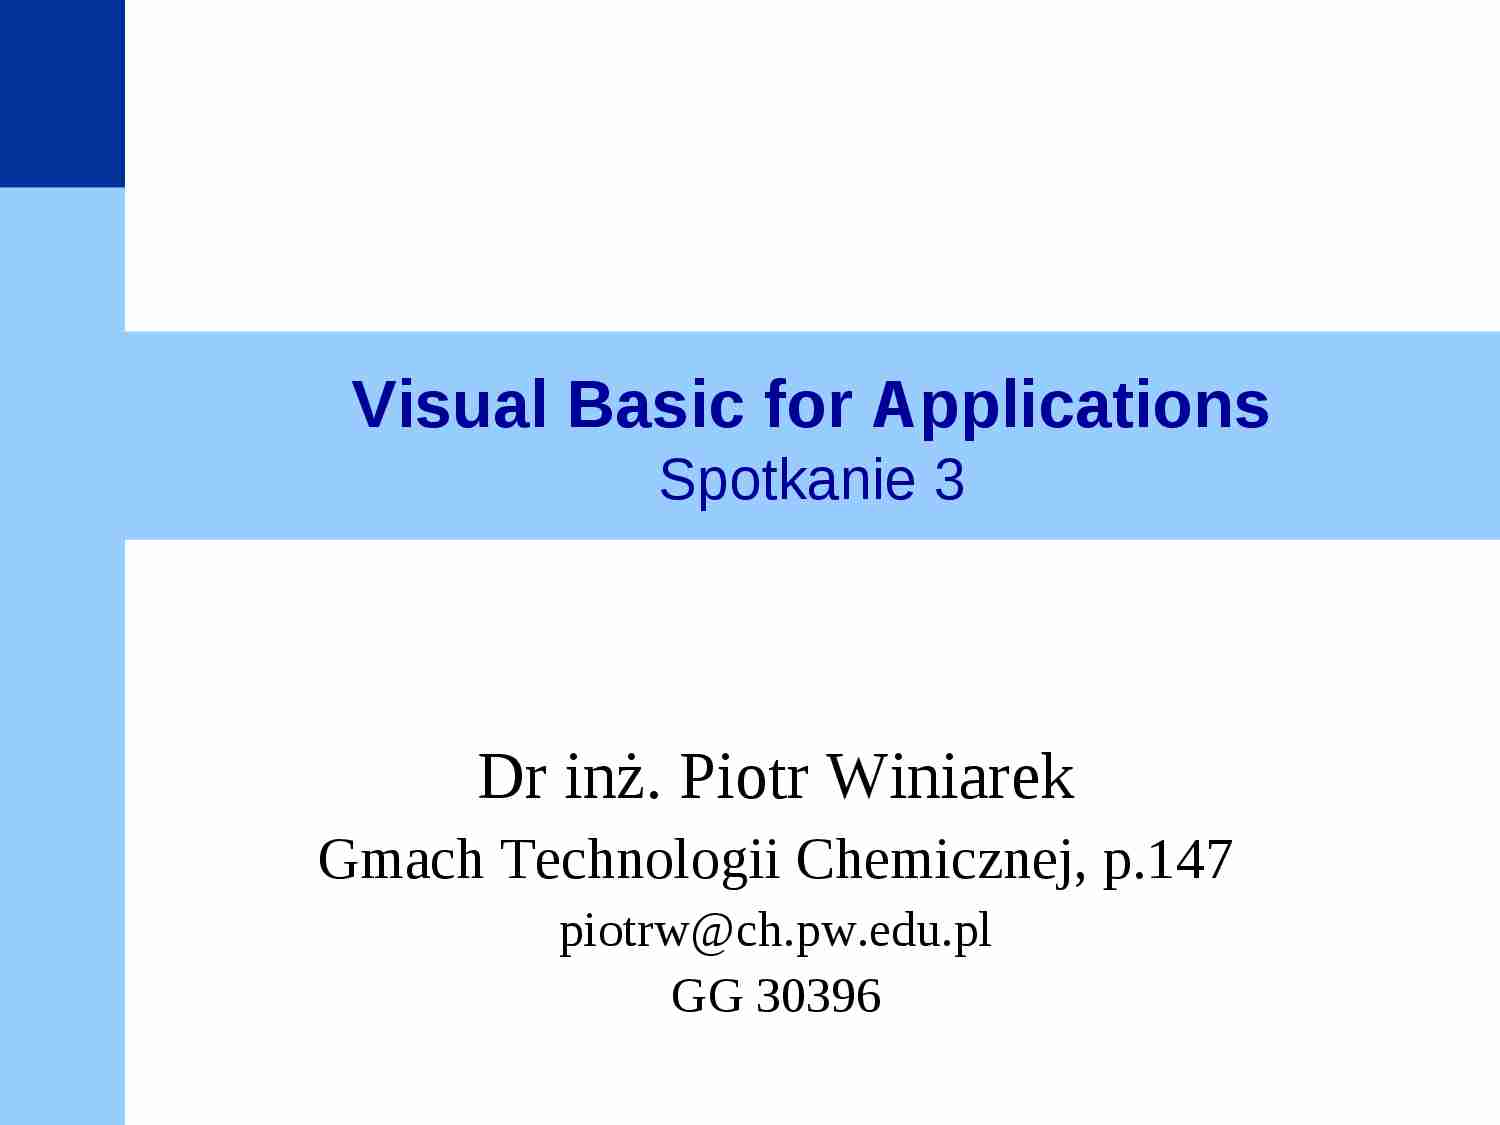 Visual Basic for Applications - prezentacja  - strona 1